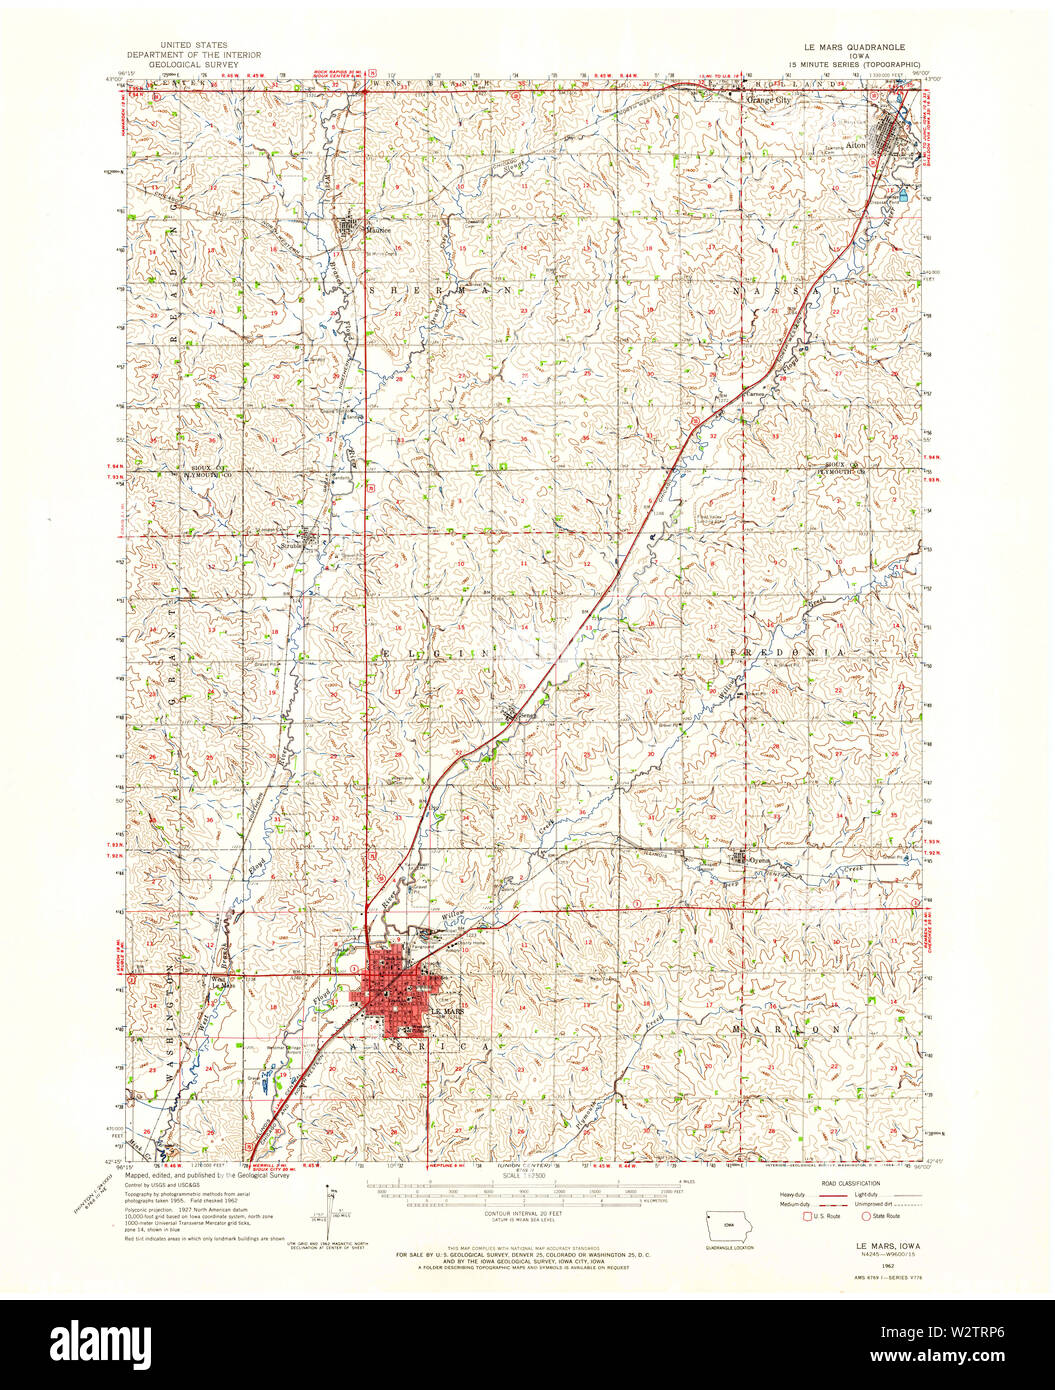 Usgs Topo Maps Iowa Ia Le Mars 174985 1962 62500 Restoration Stock